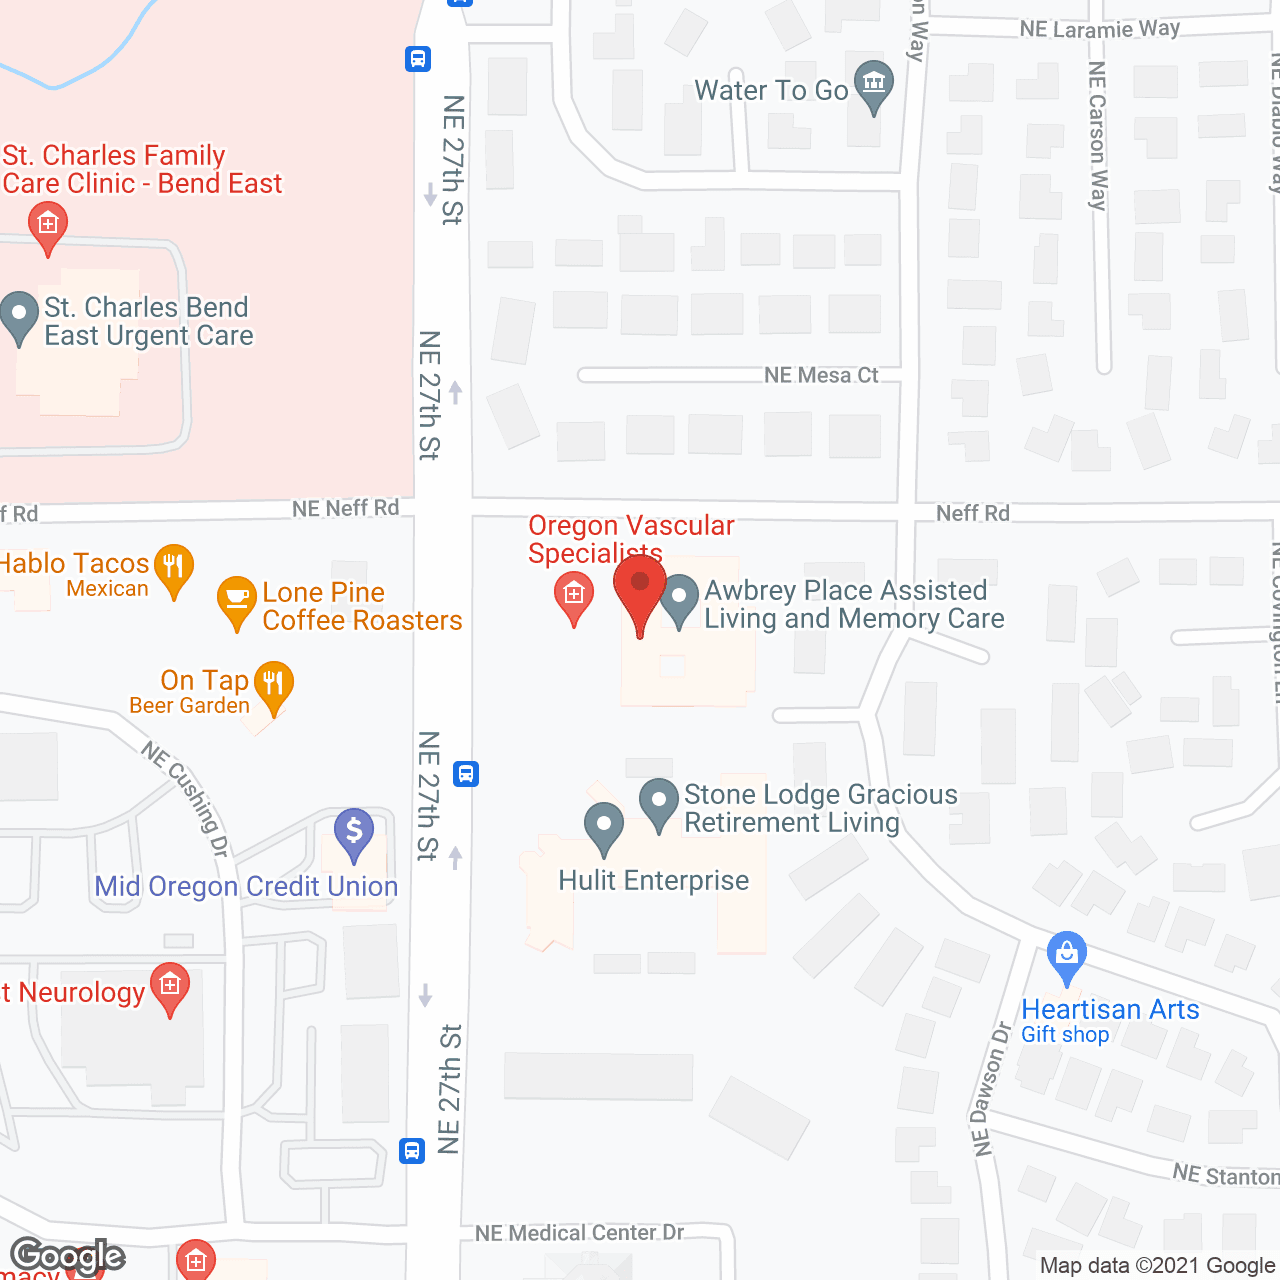 Awbrey Place in google map